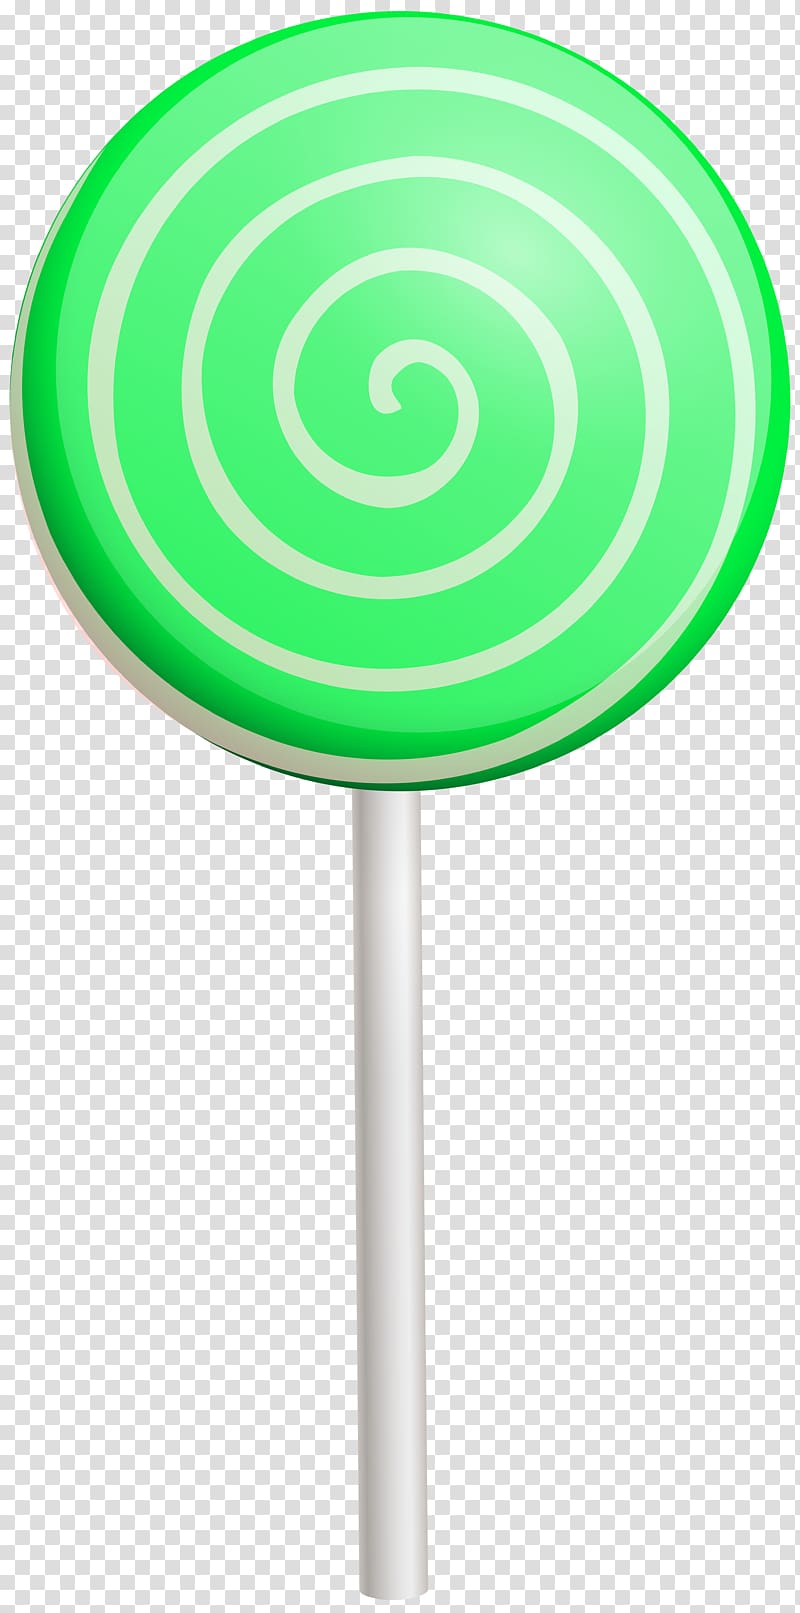 green swirl design clip art